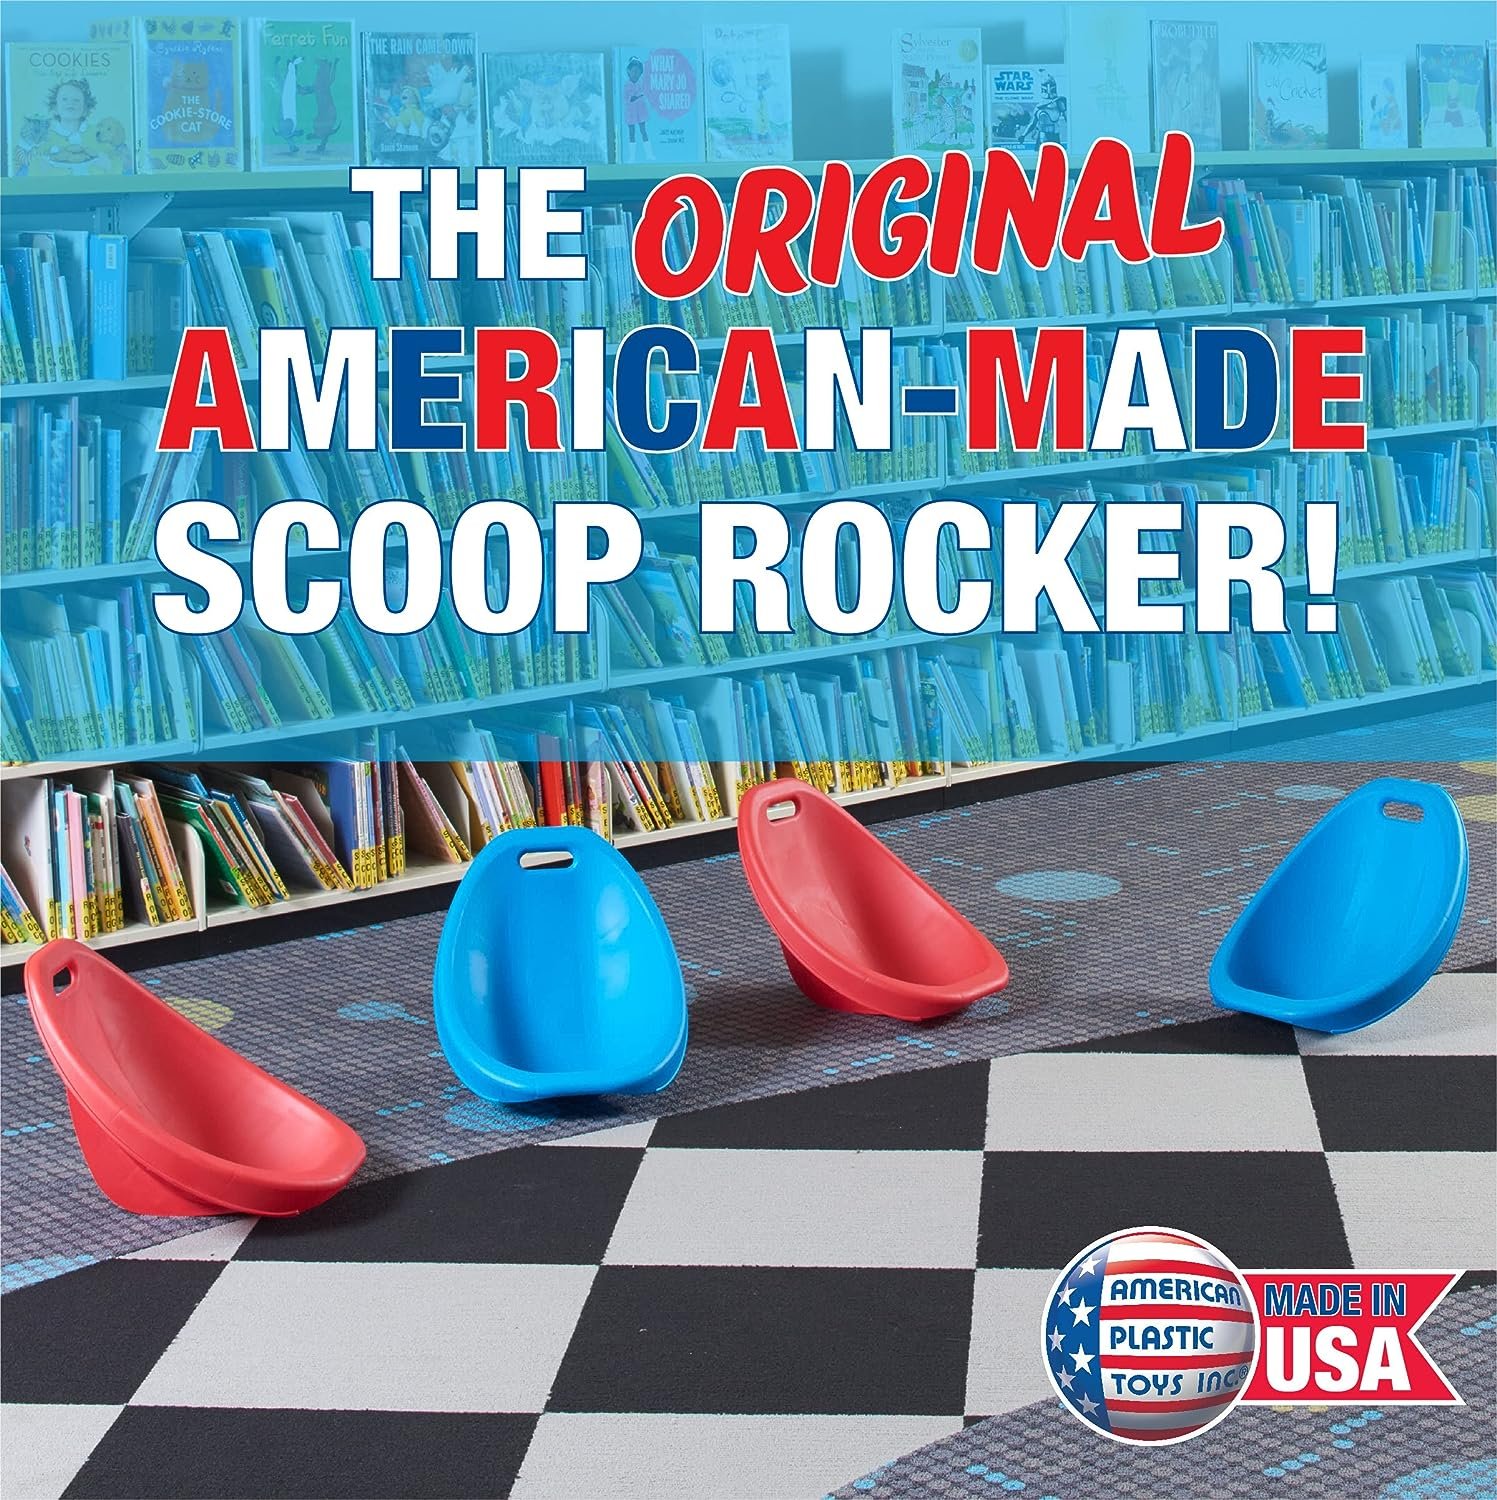 American Plastic Toys Little Kids Scoop Rocker Review